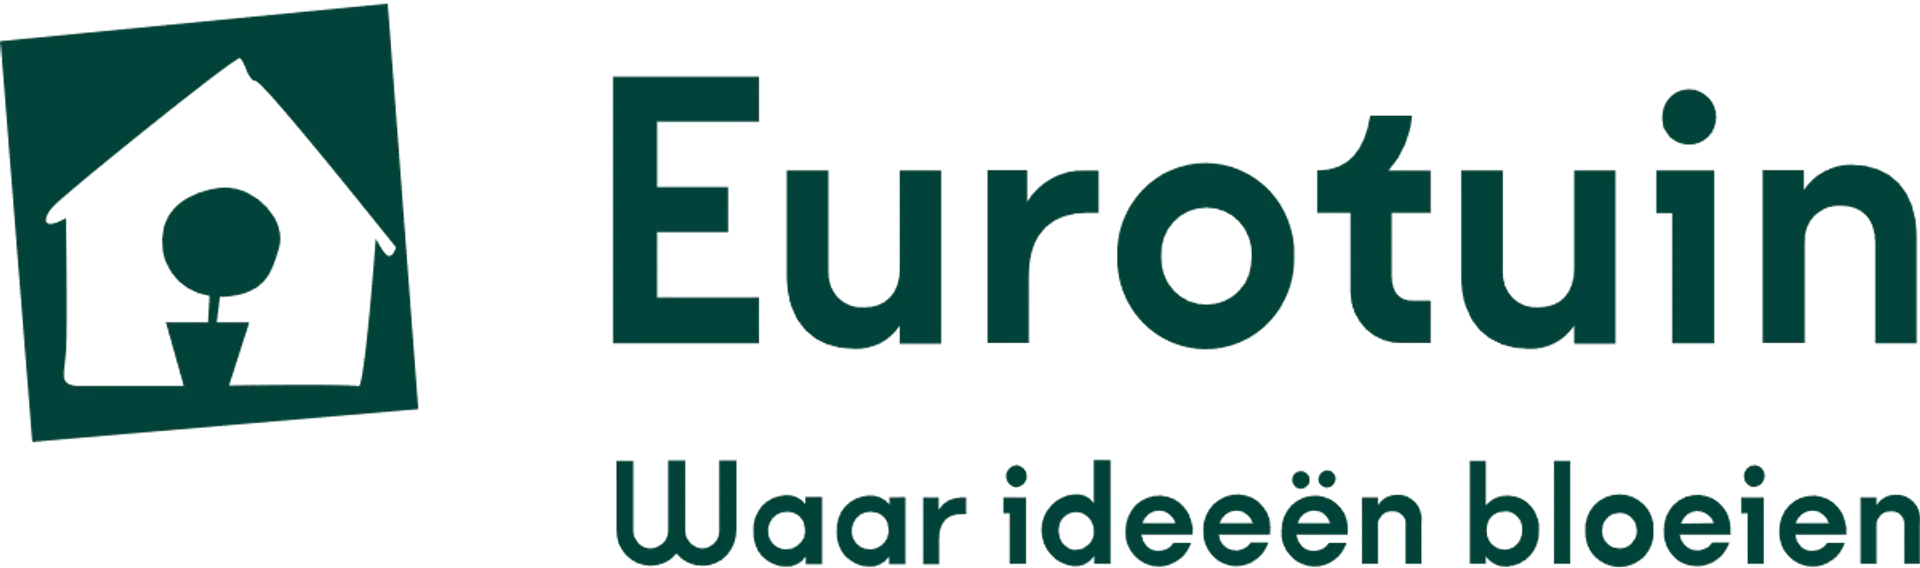 EUROTUIN logo